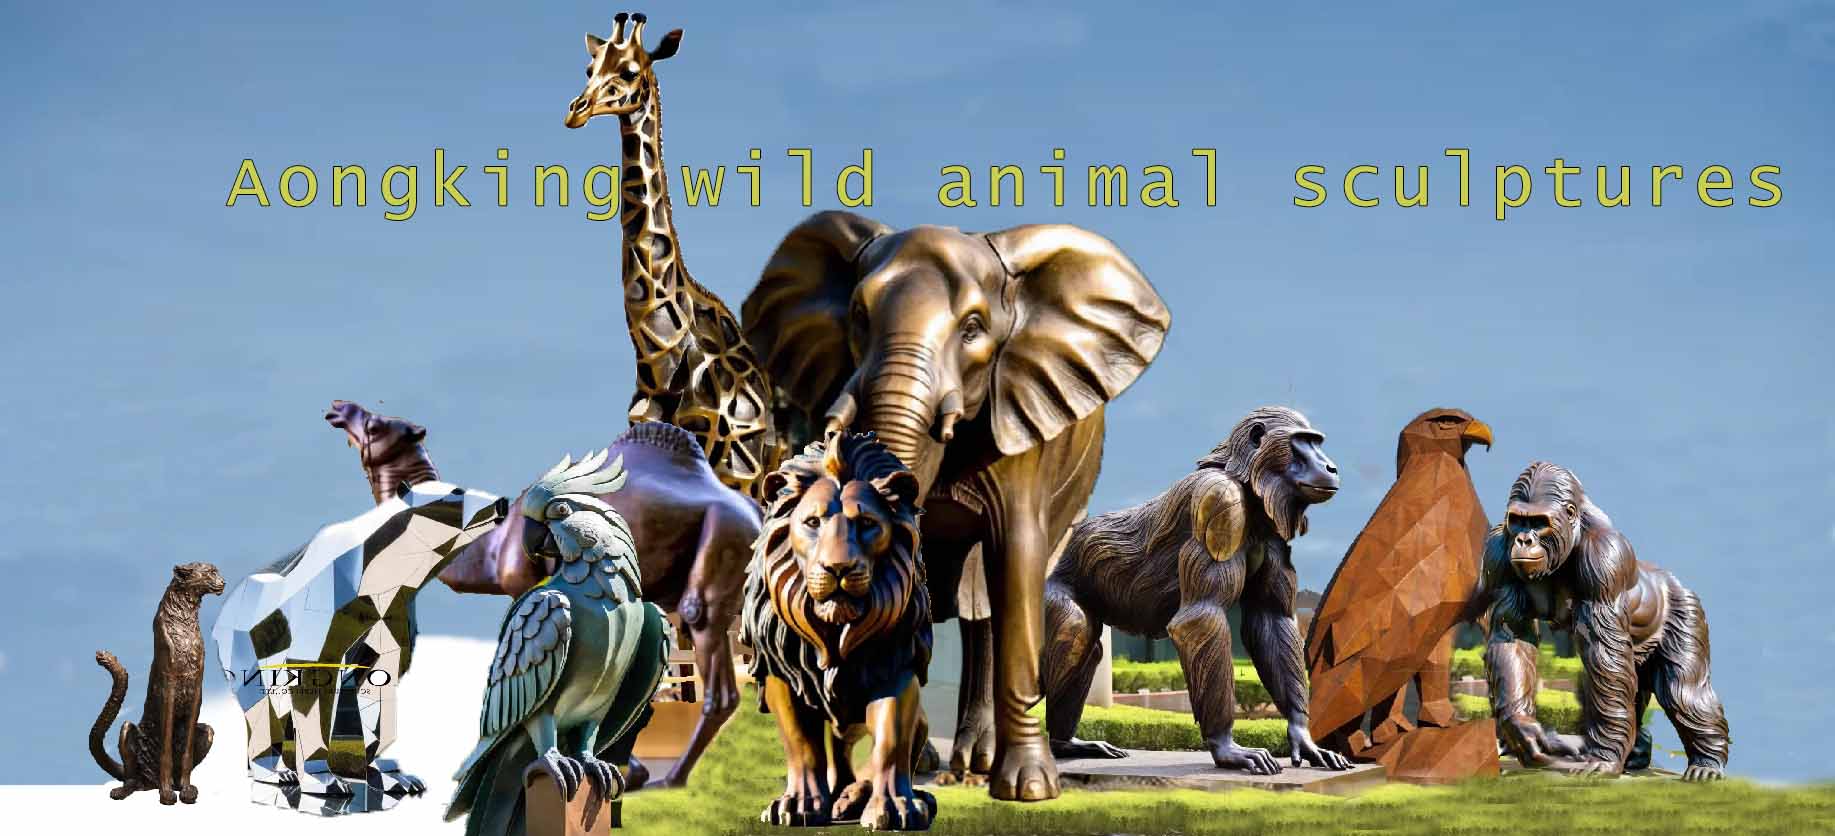 Aongking wild animal sculptures